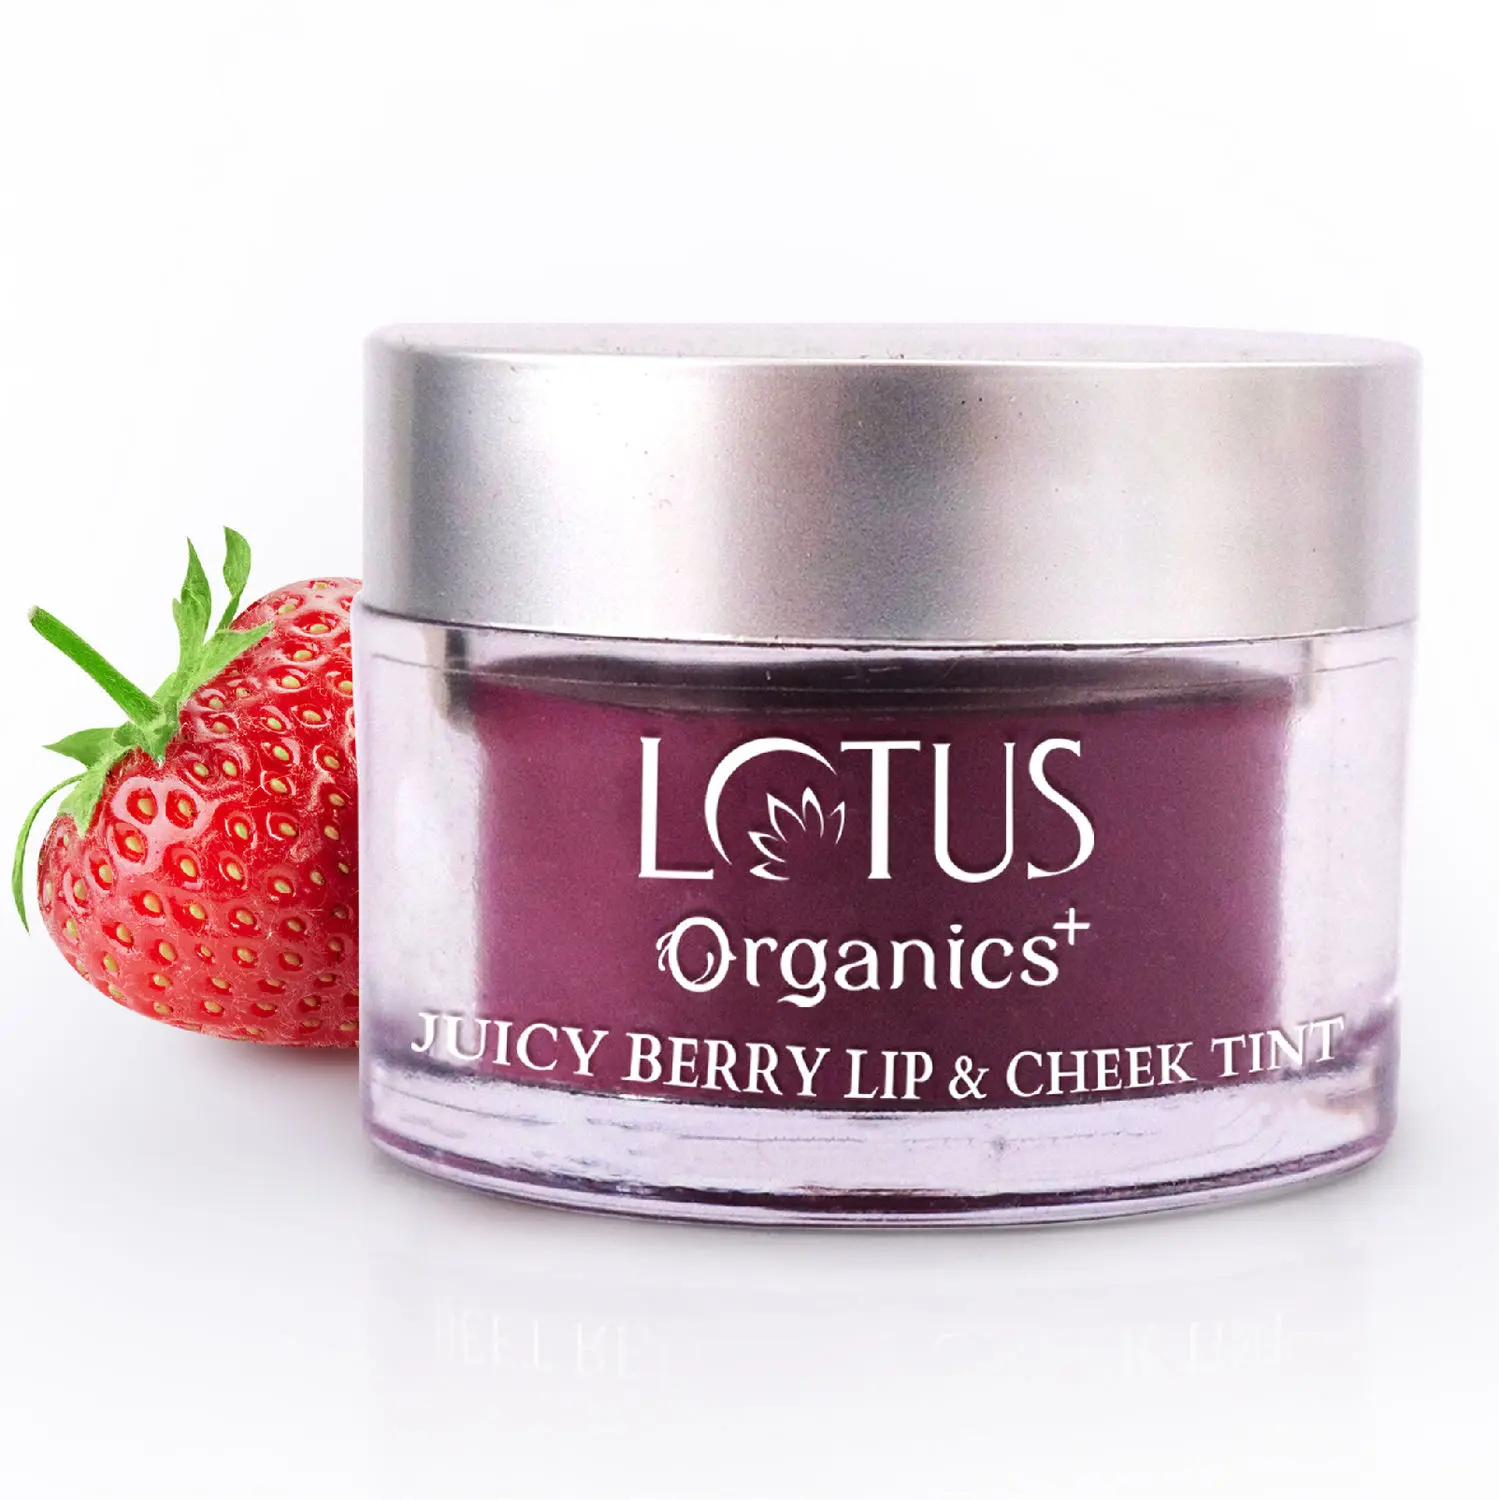 Lotus Organics + Juicy Berry Lip & Cheek Tint |Ntural Organic & Youthful Glow|All Skin Types|10gm